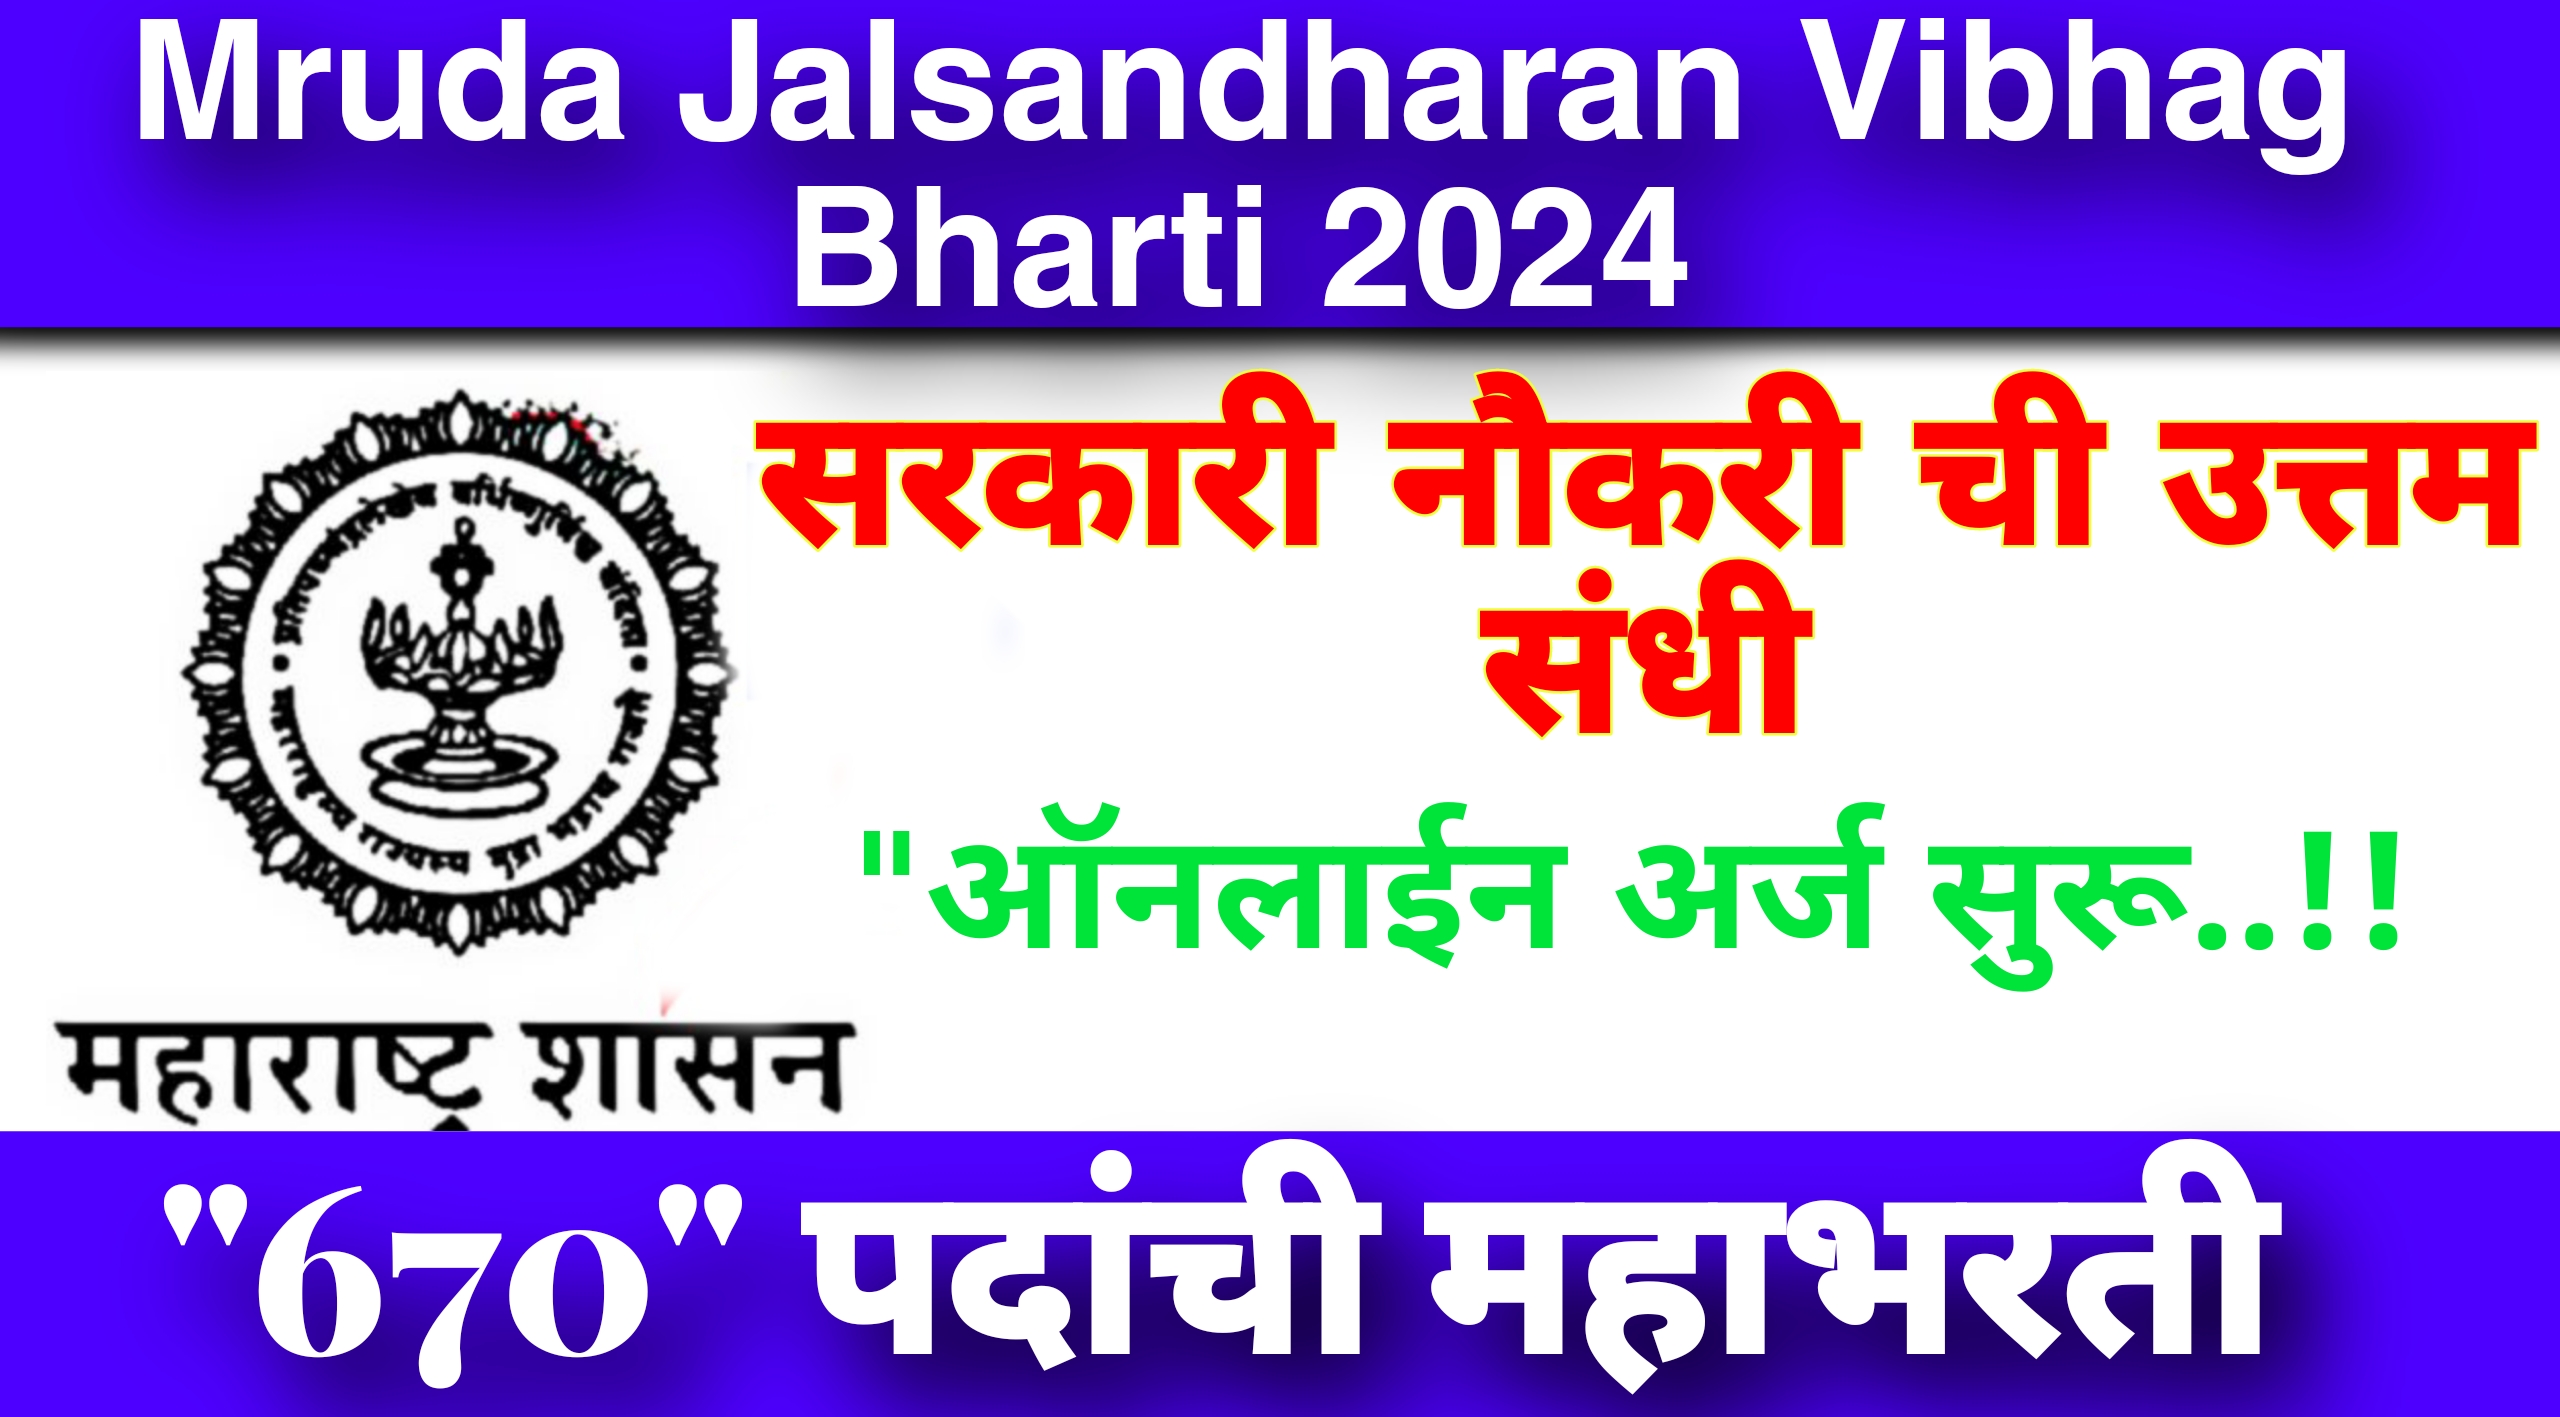 Mruda Jalsandharan Vibhag 2024